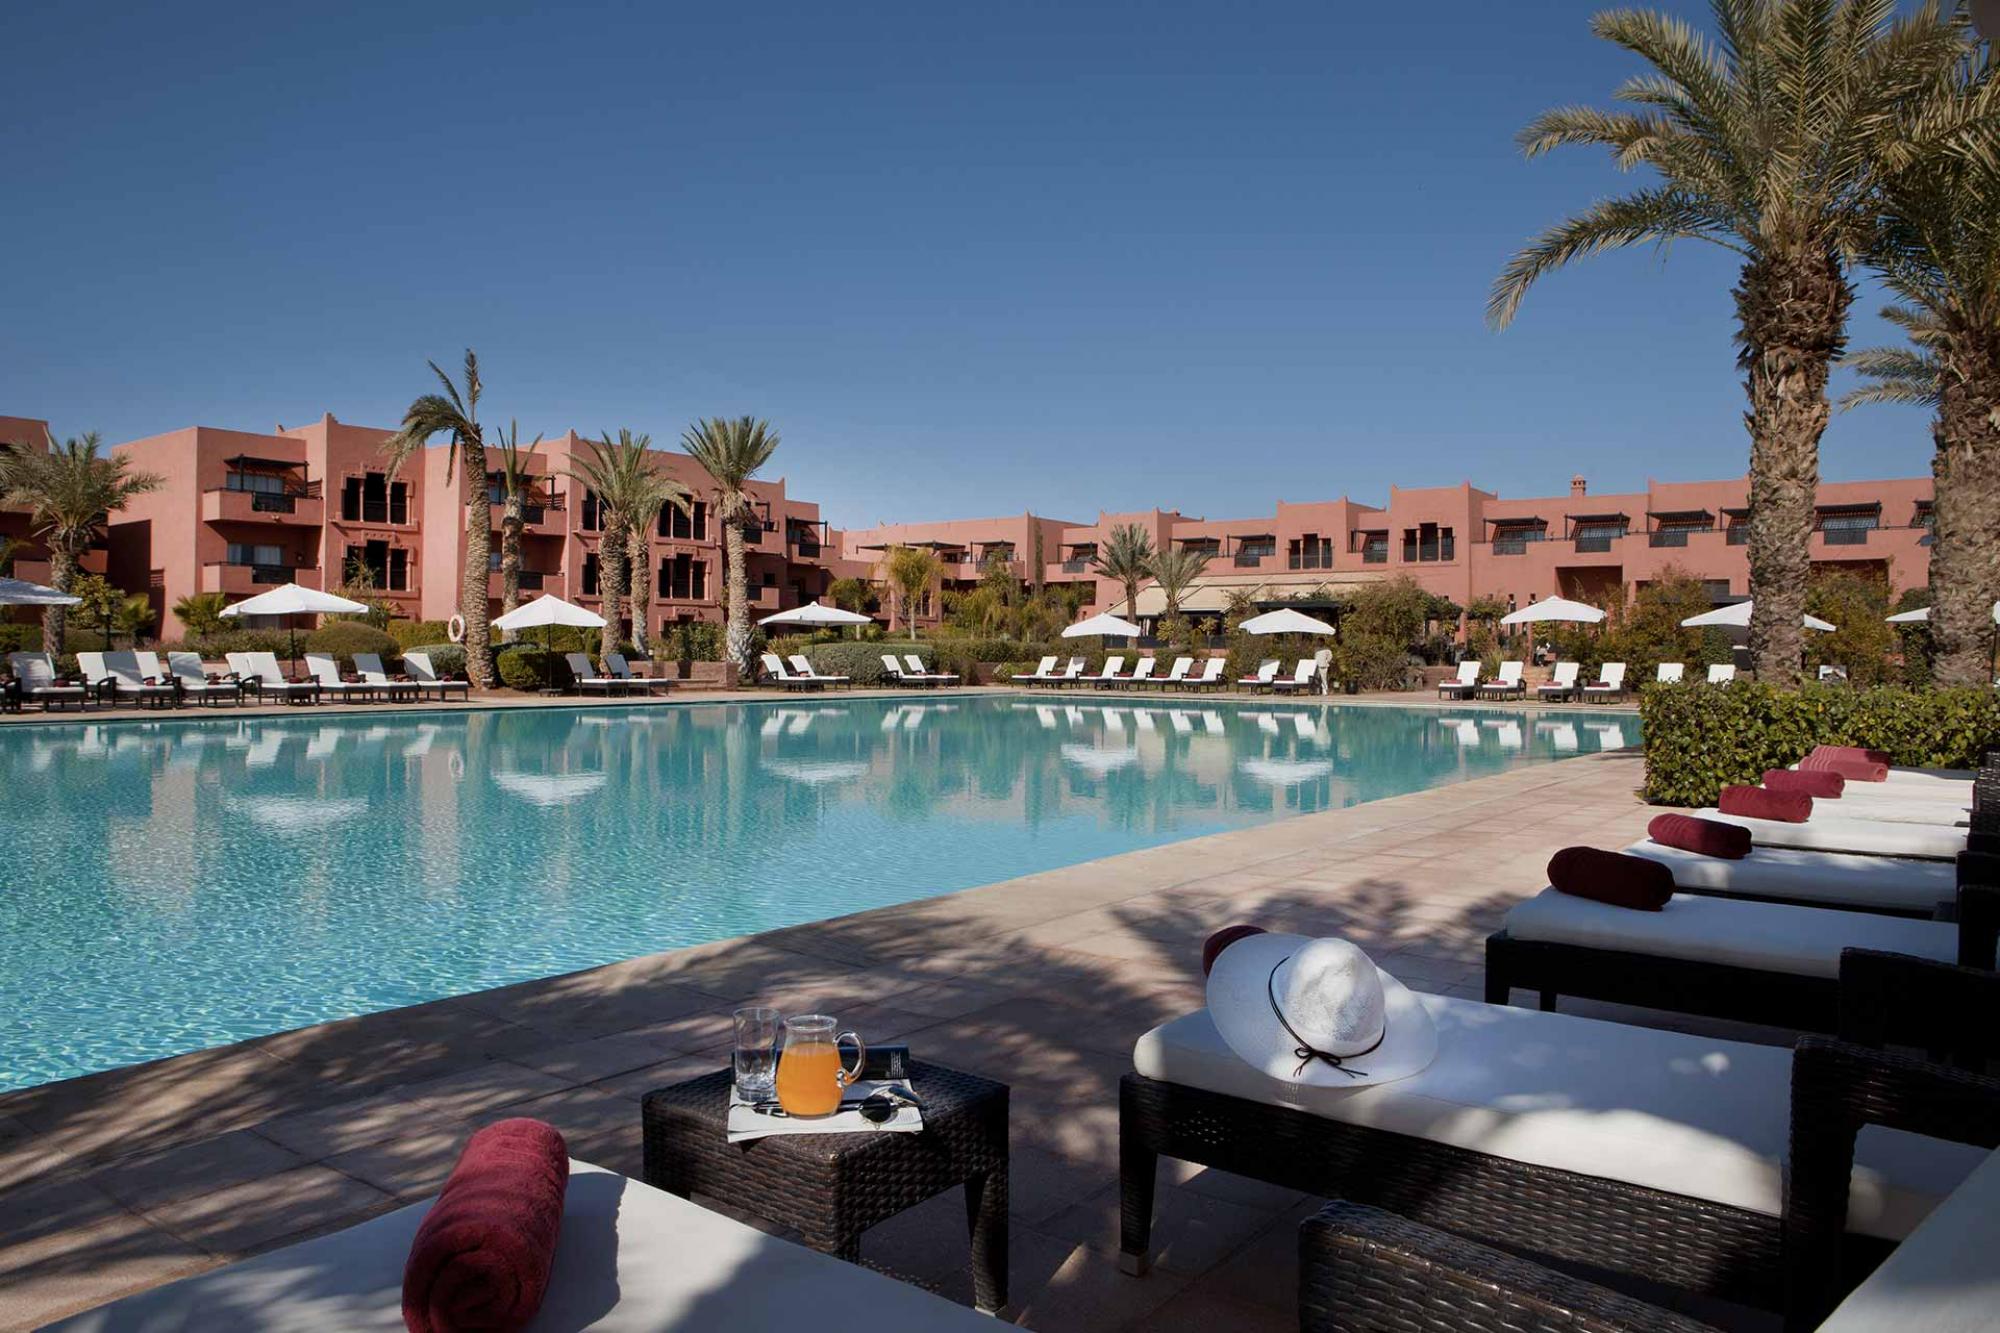 The Kenzi Menara Palace's impressive main pool situated in stunning Morocco.